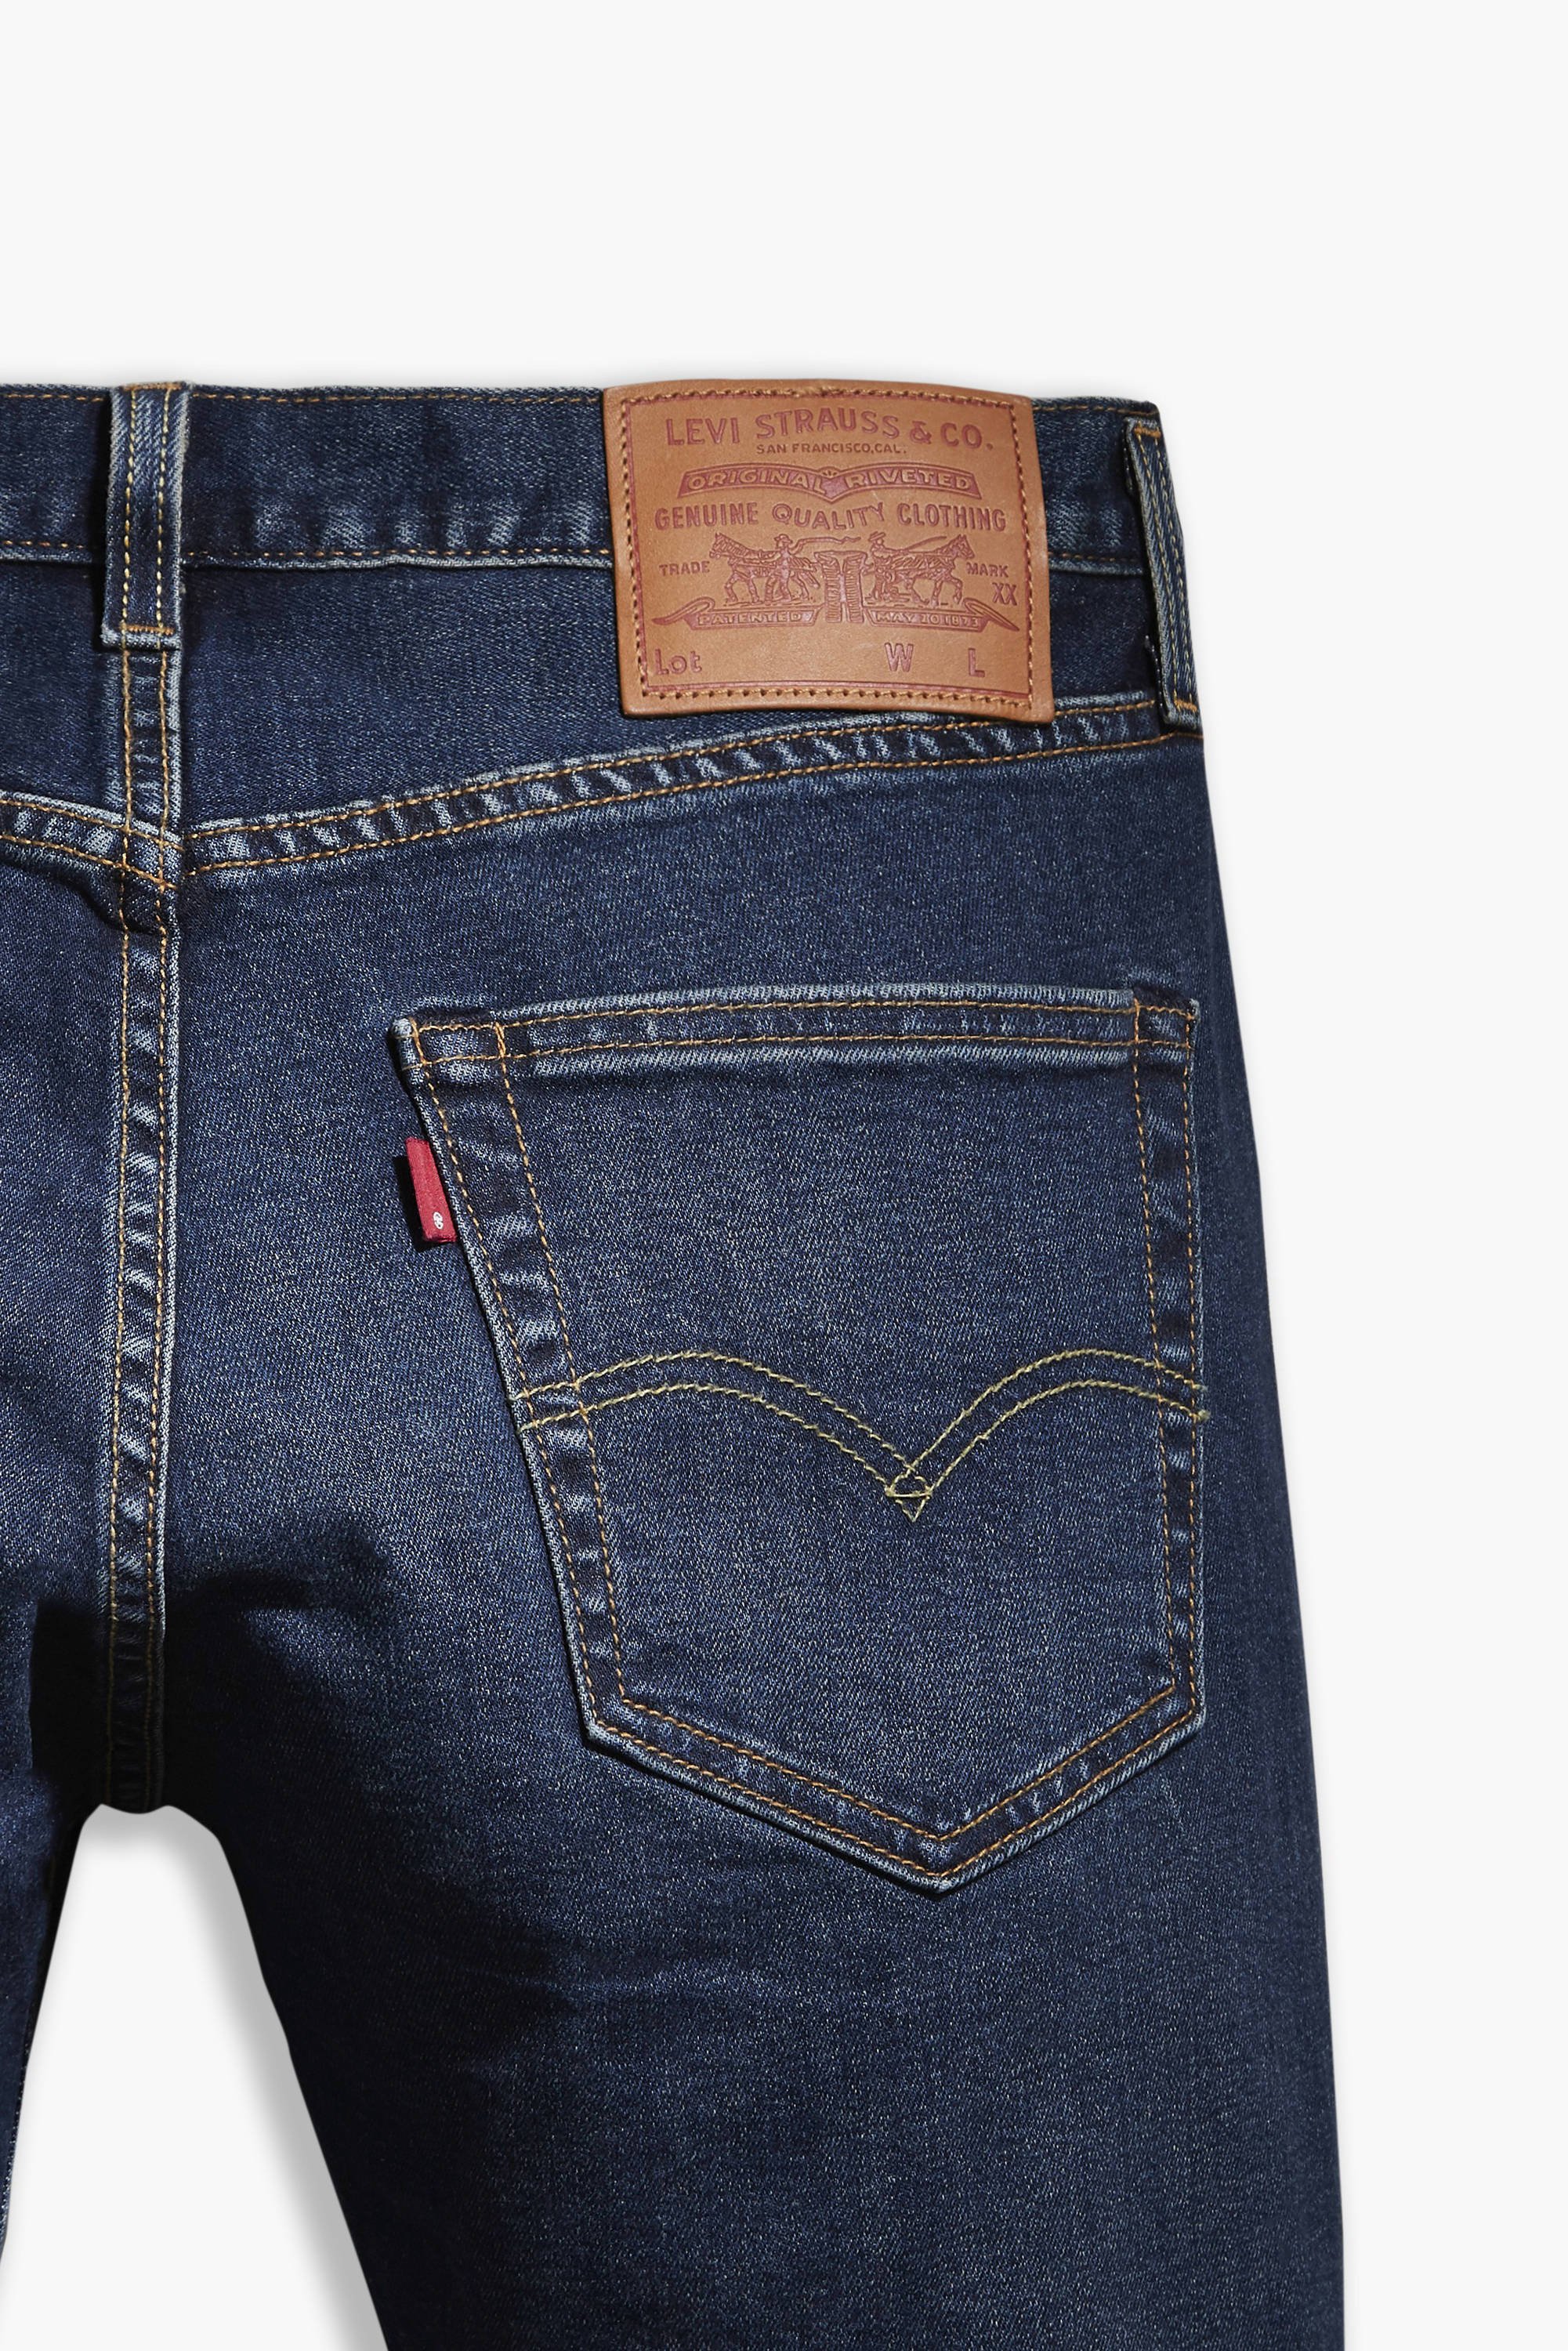 Levi's 501 regular fit jeans block 